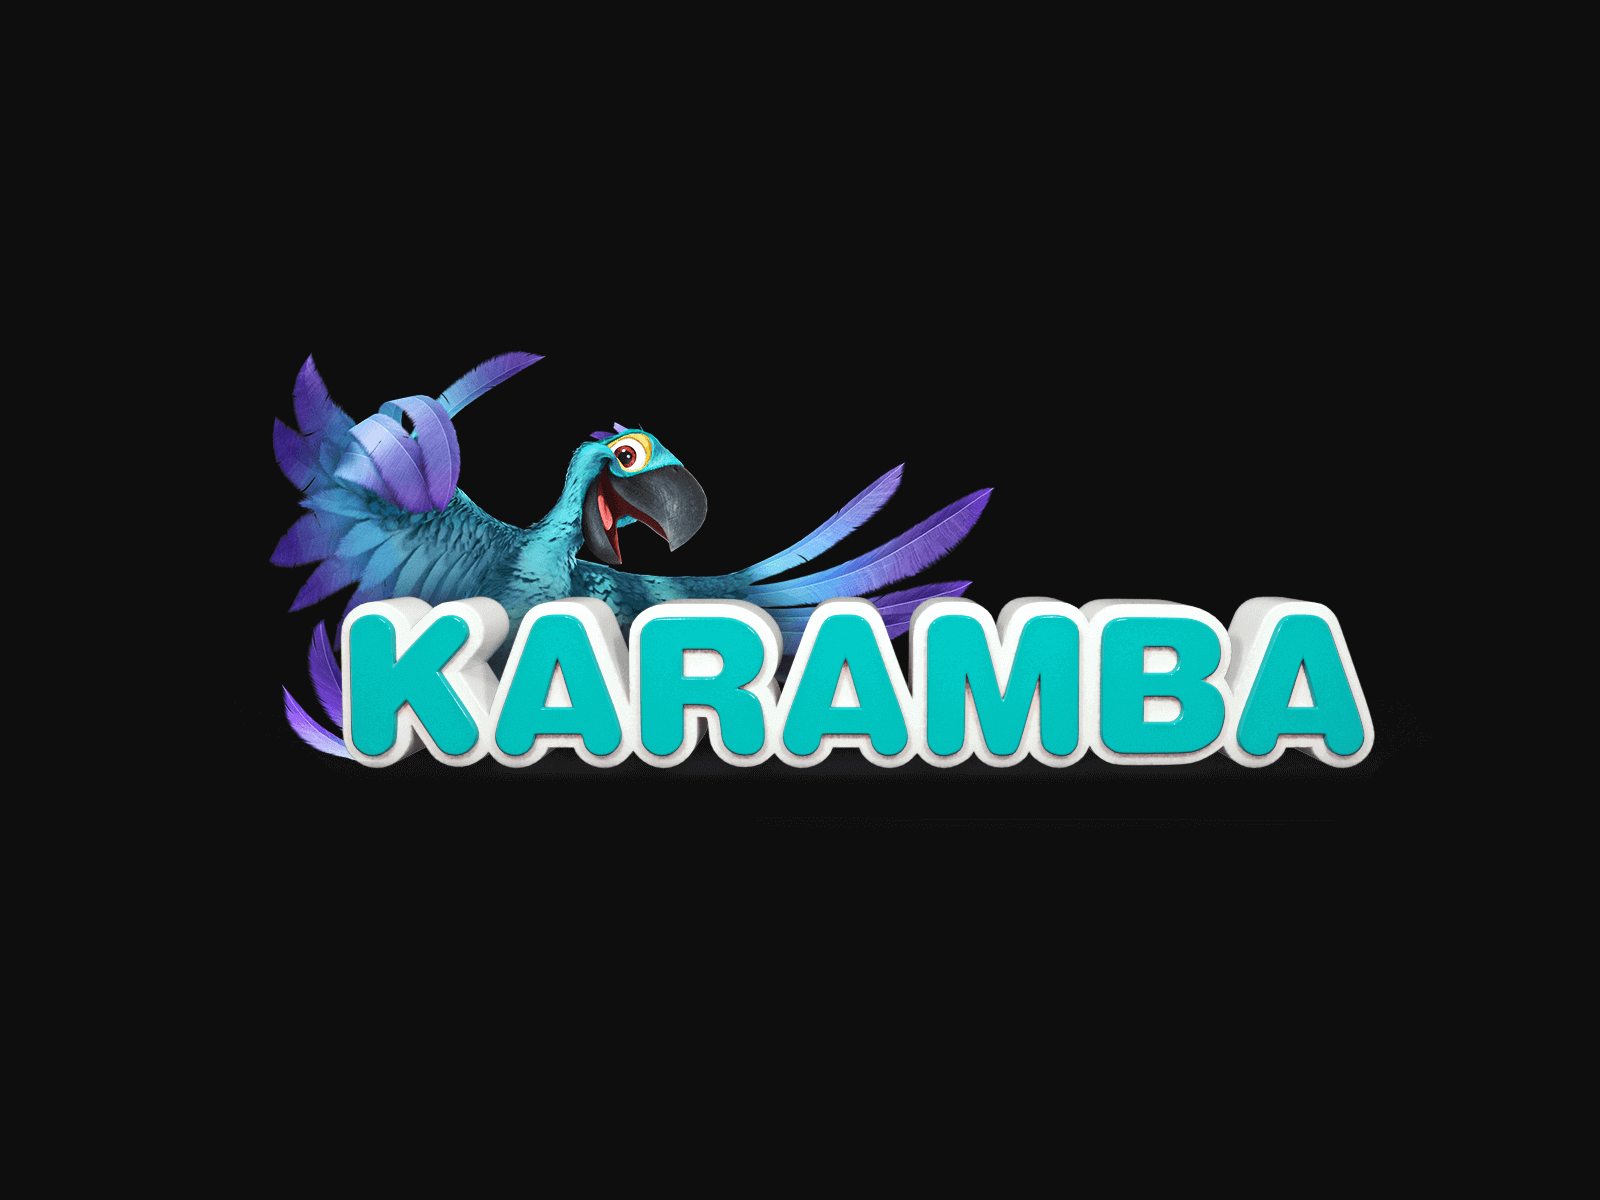 karamba casino review (2022) - pros &amp; cons + fair rating